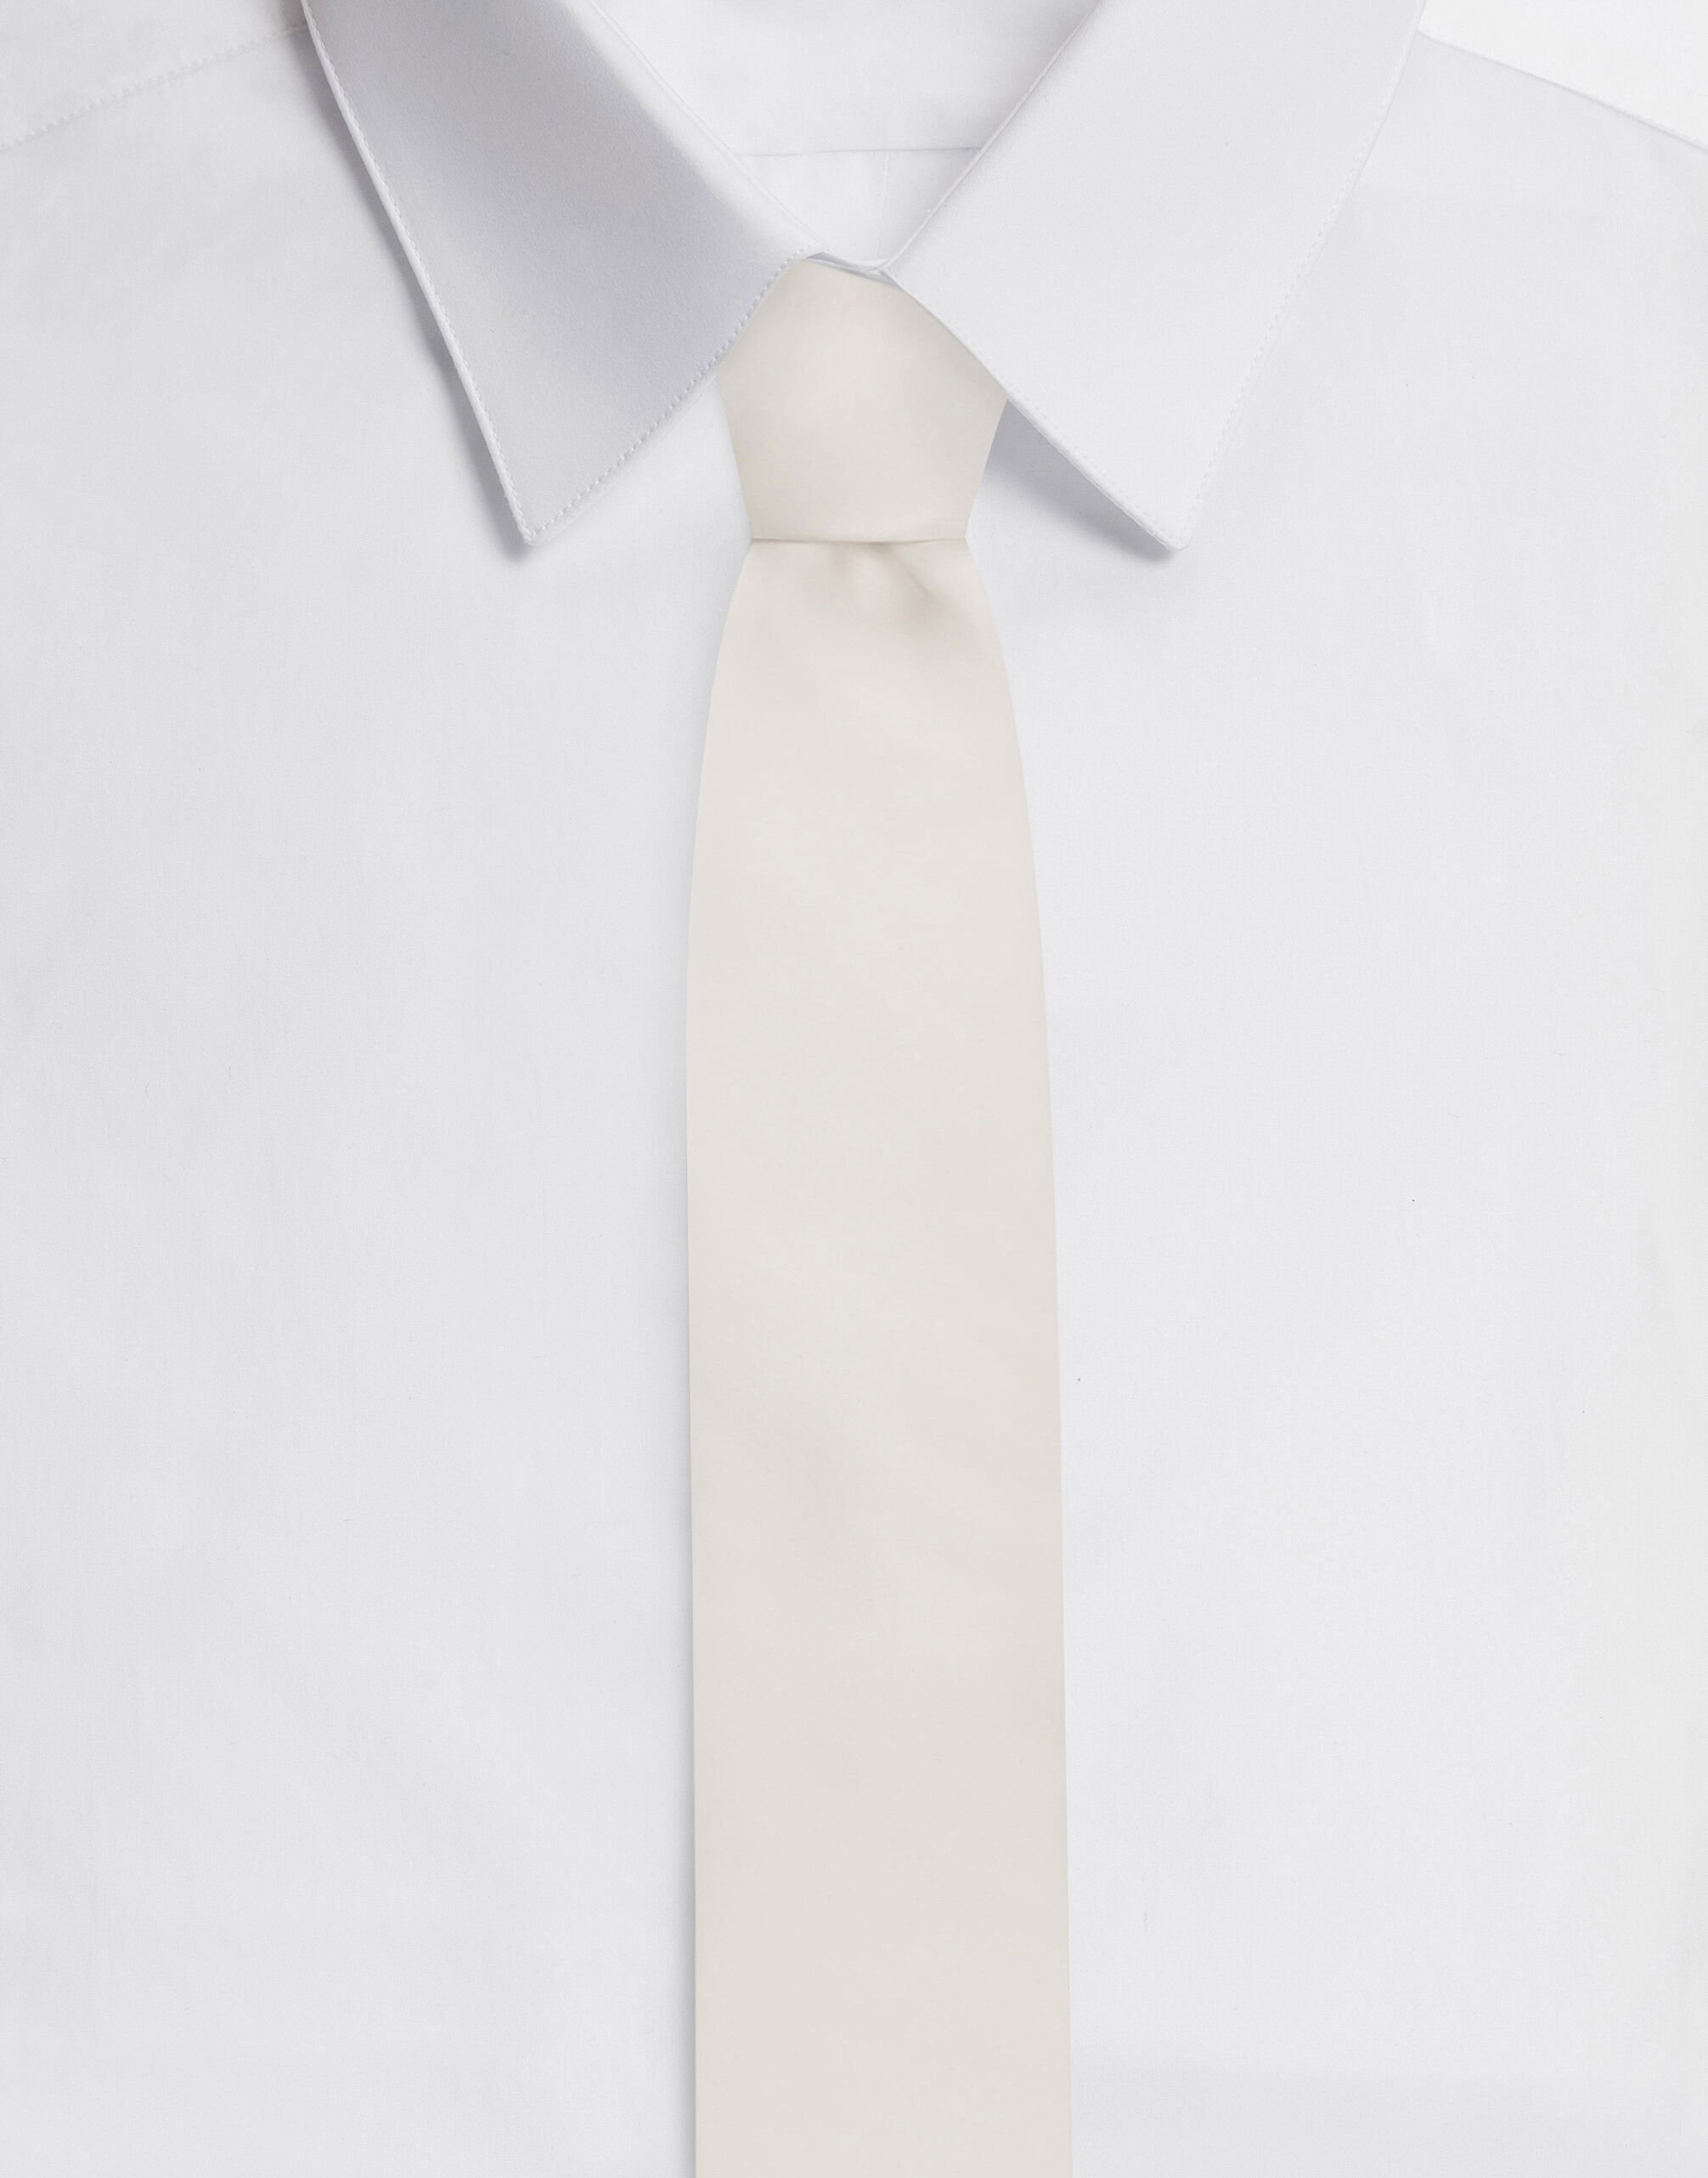 Dolce & Gabbana ربطة عنق حريرية بعرض 6 سم وتطريز شعار DG أبيض GT147EG0UBU